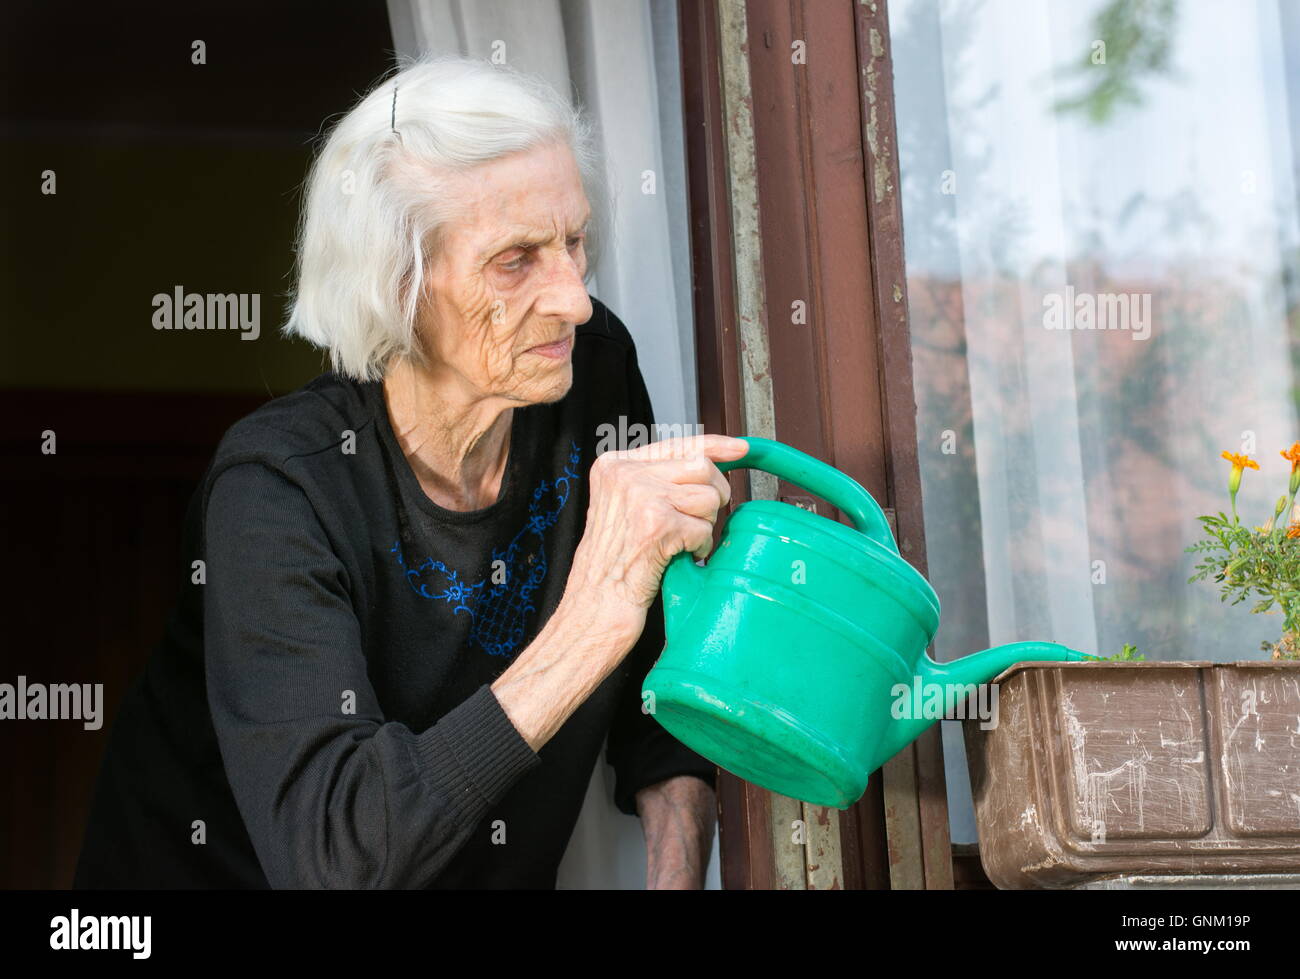 Senior woman watering flower on her house window Stock Photo